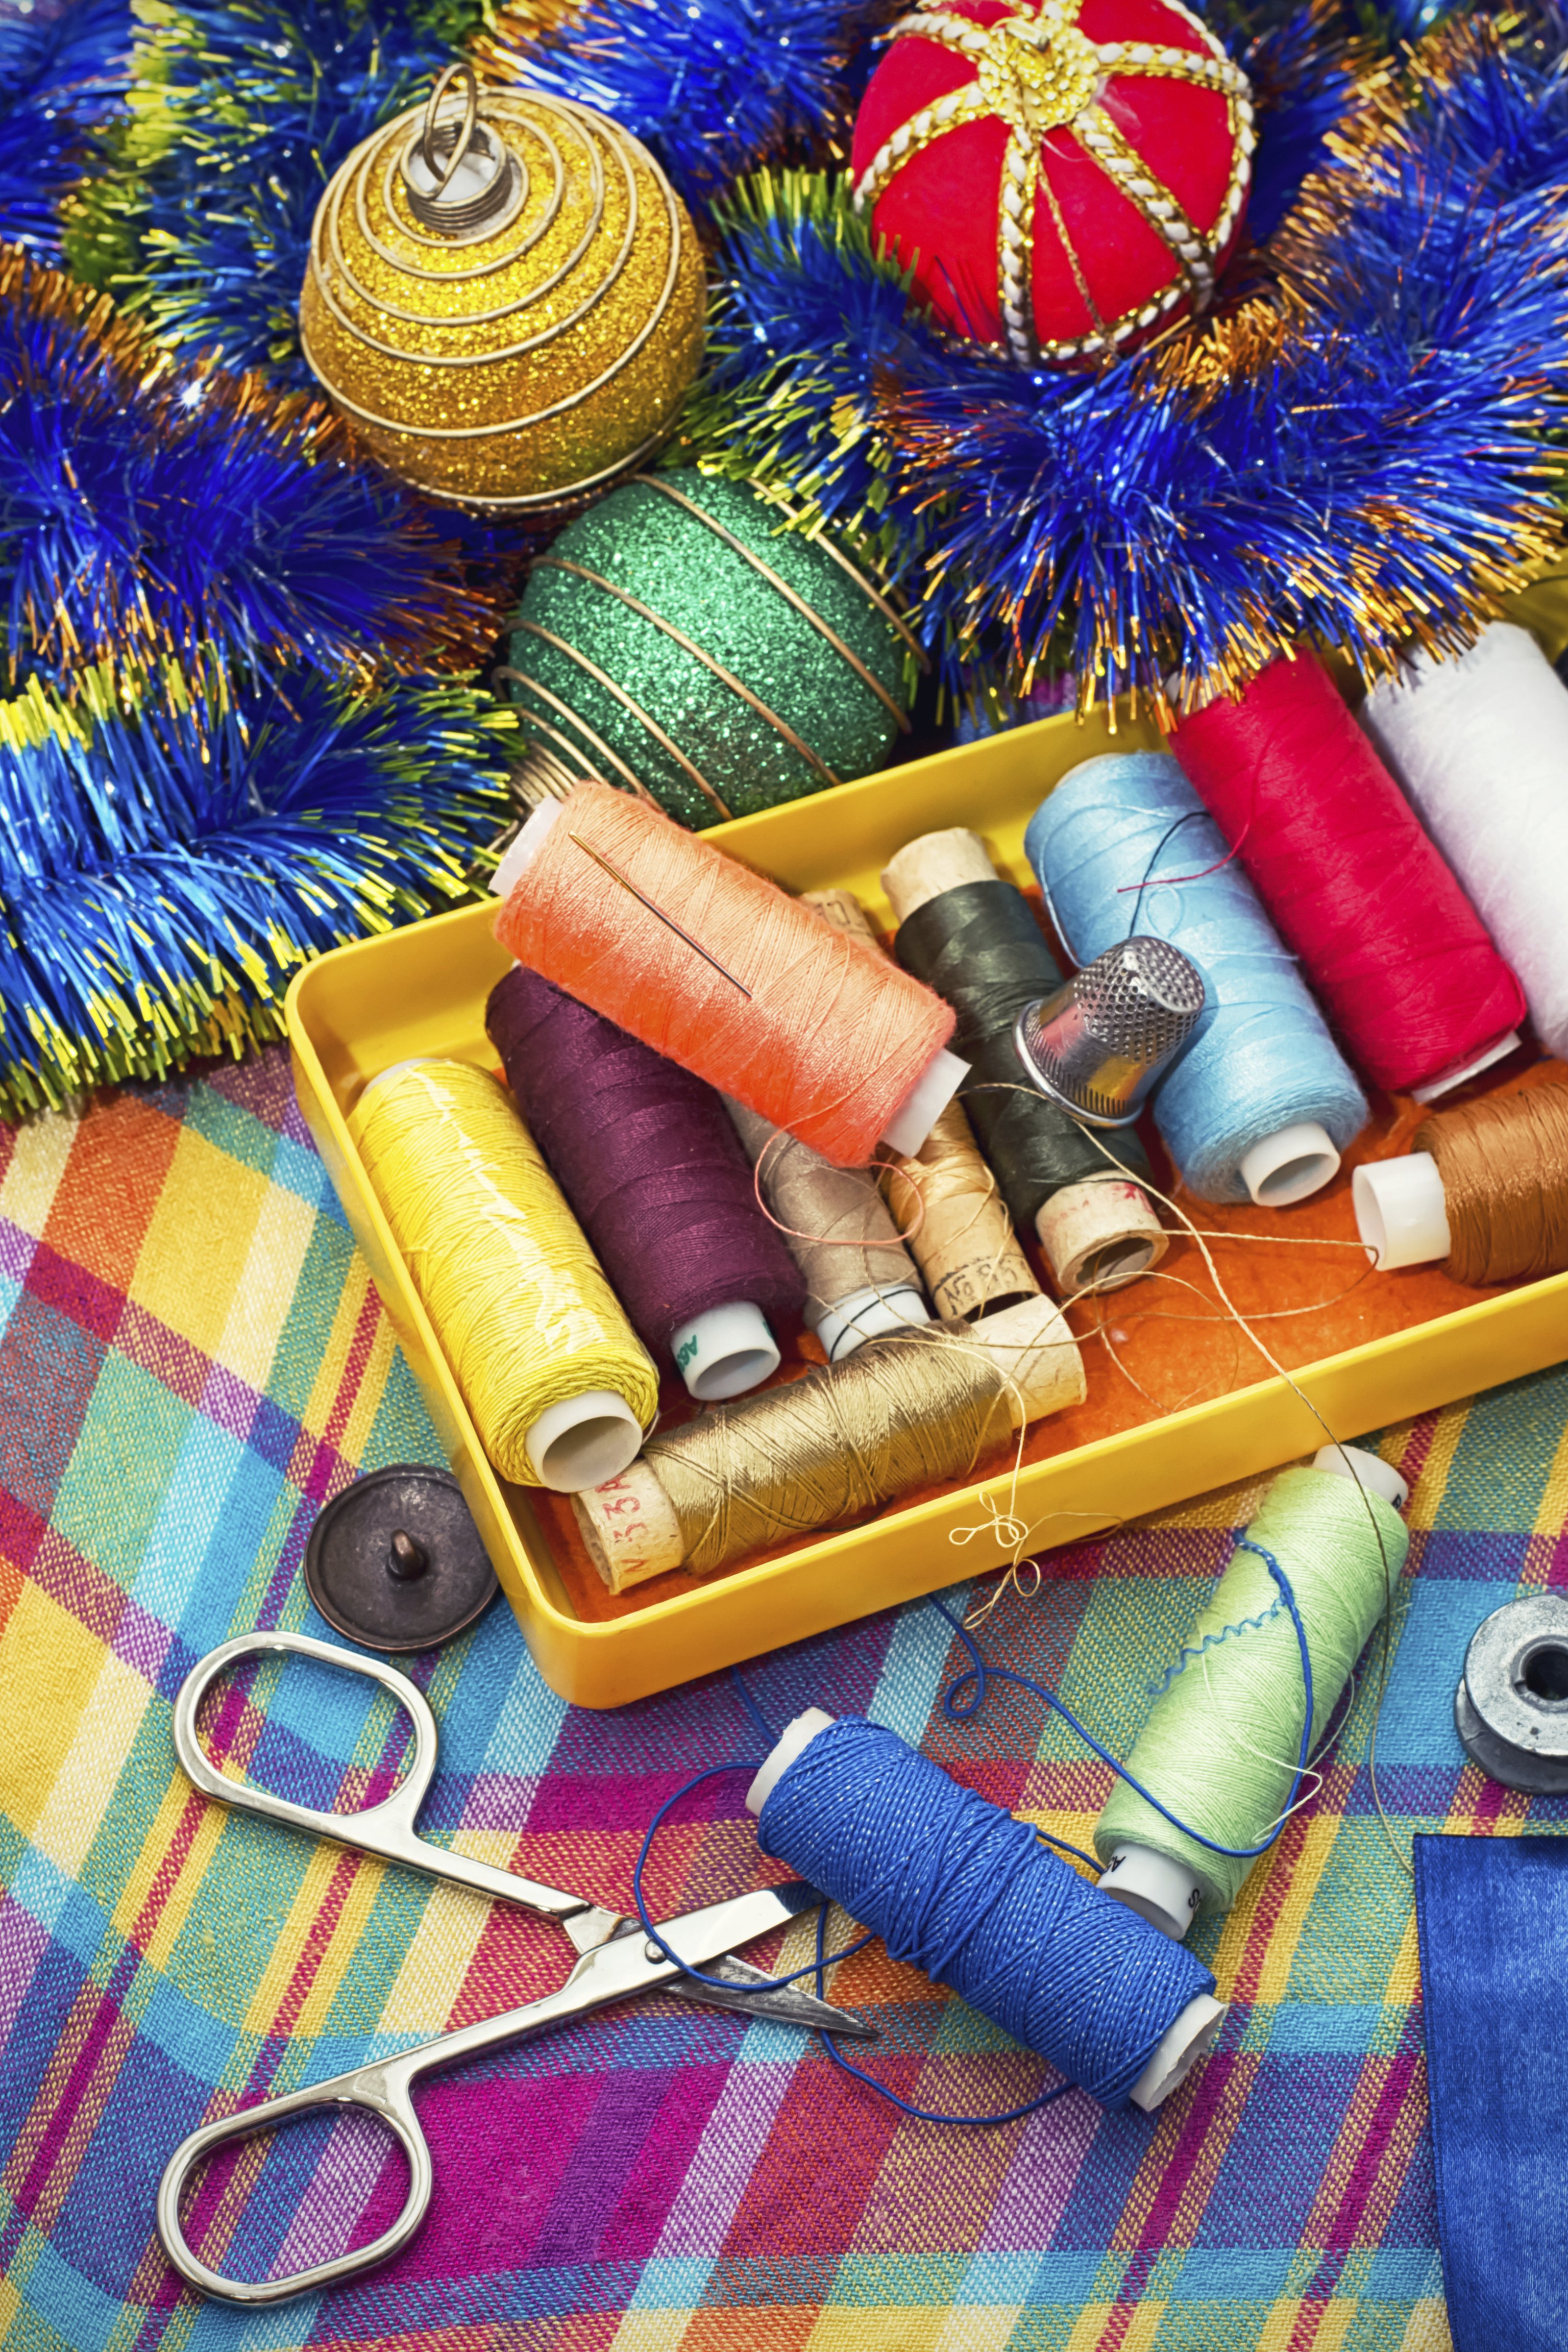 10 Festive DIY Christmas Tree Skirts